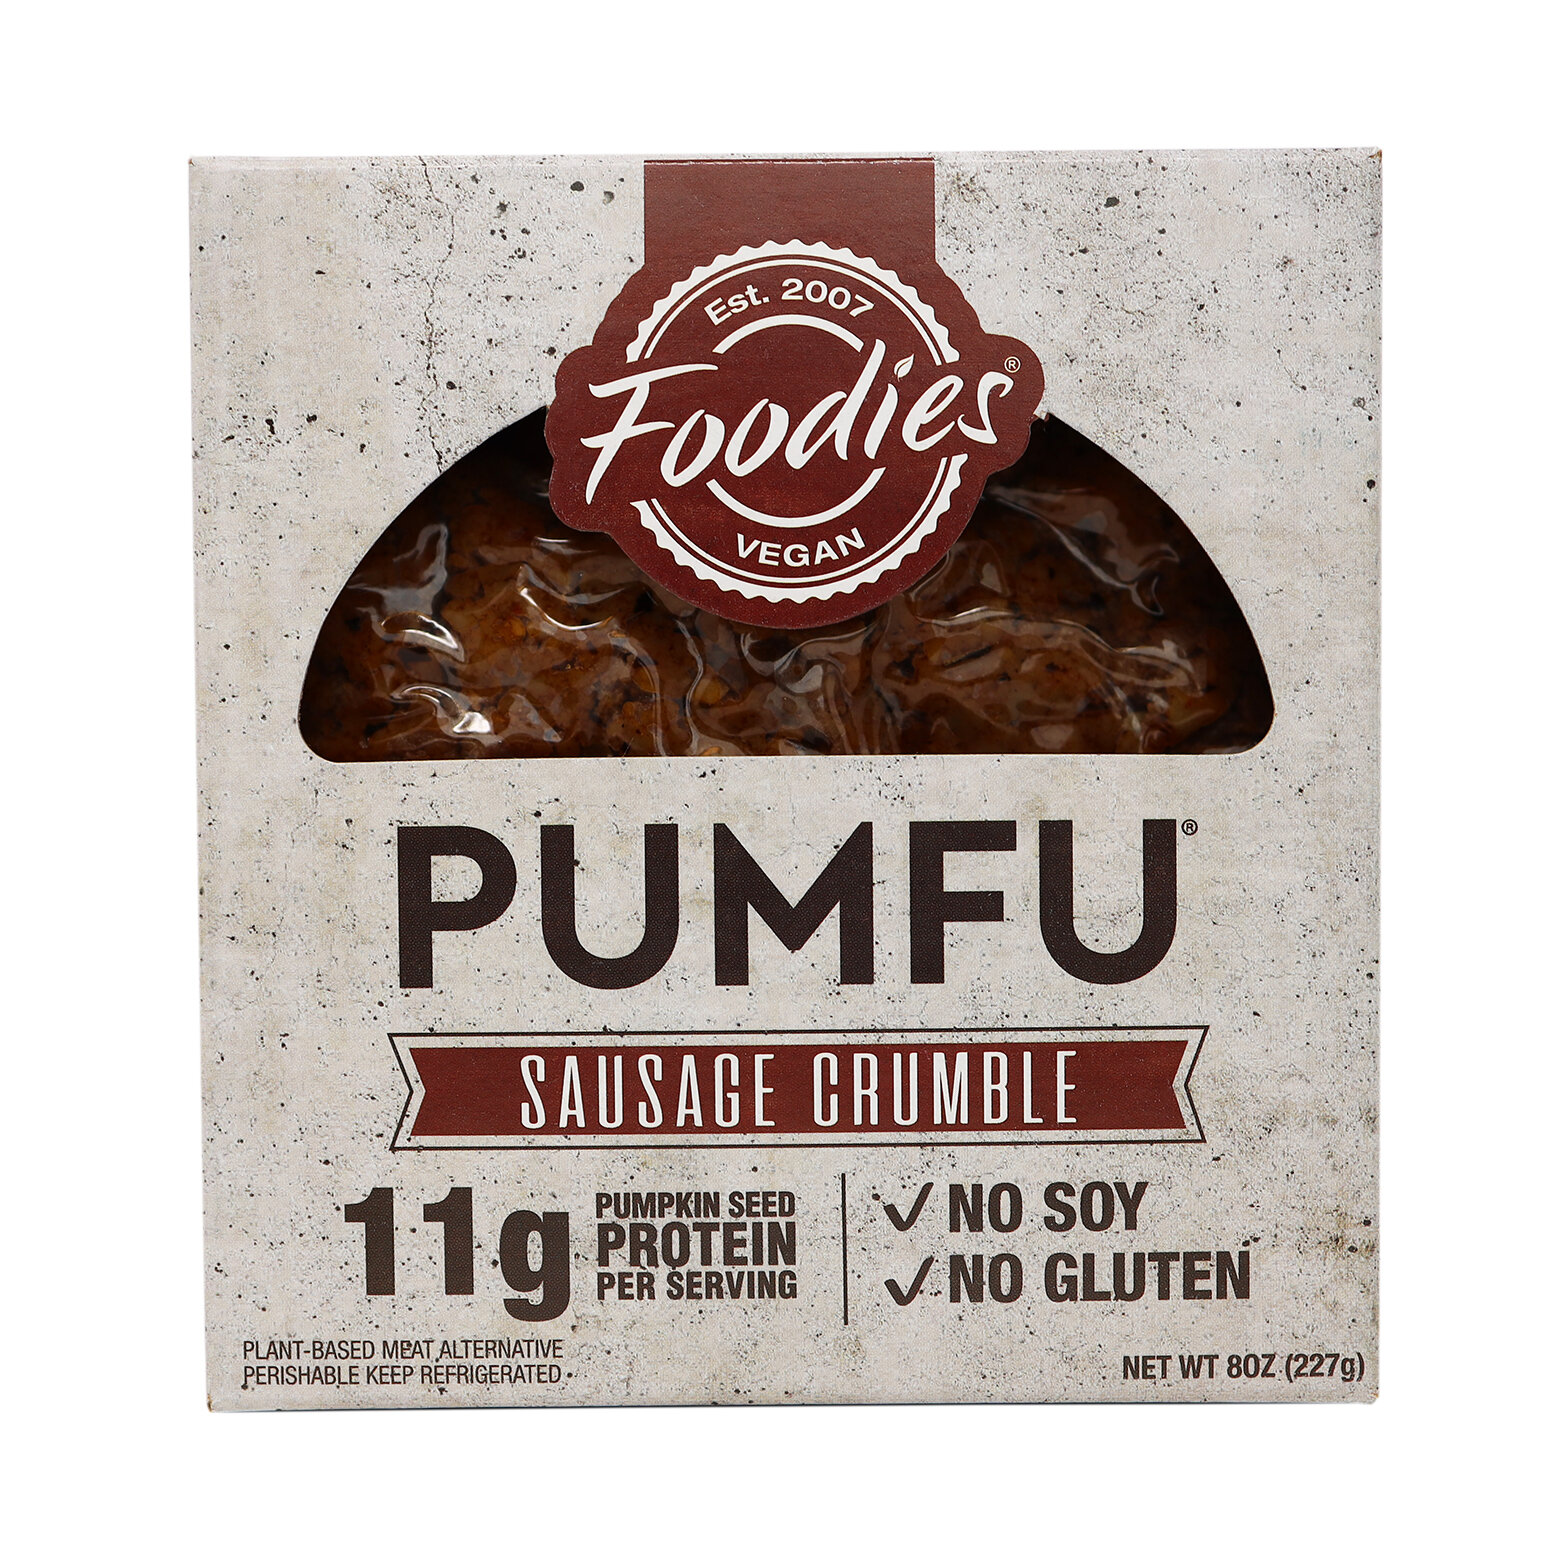 pumfu sausage crumble front 4x4 300dpi copy.jpg